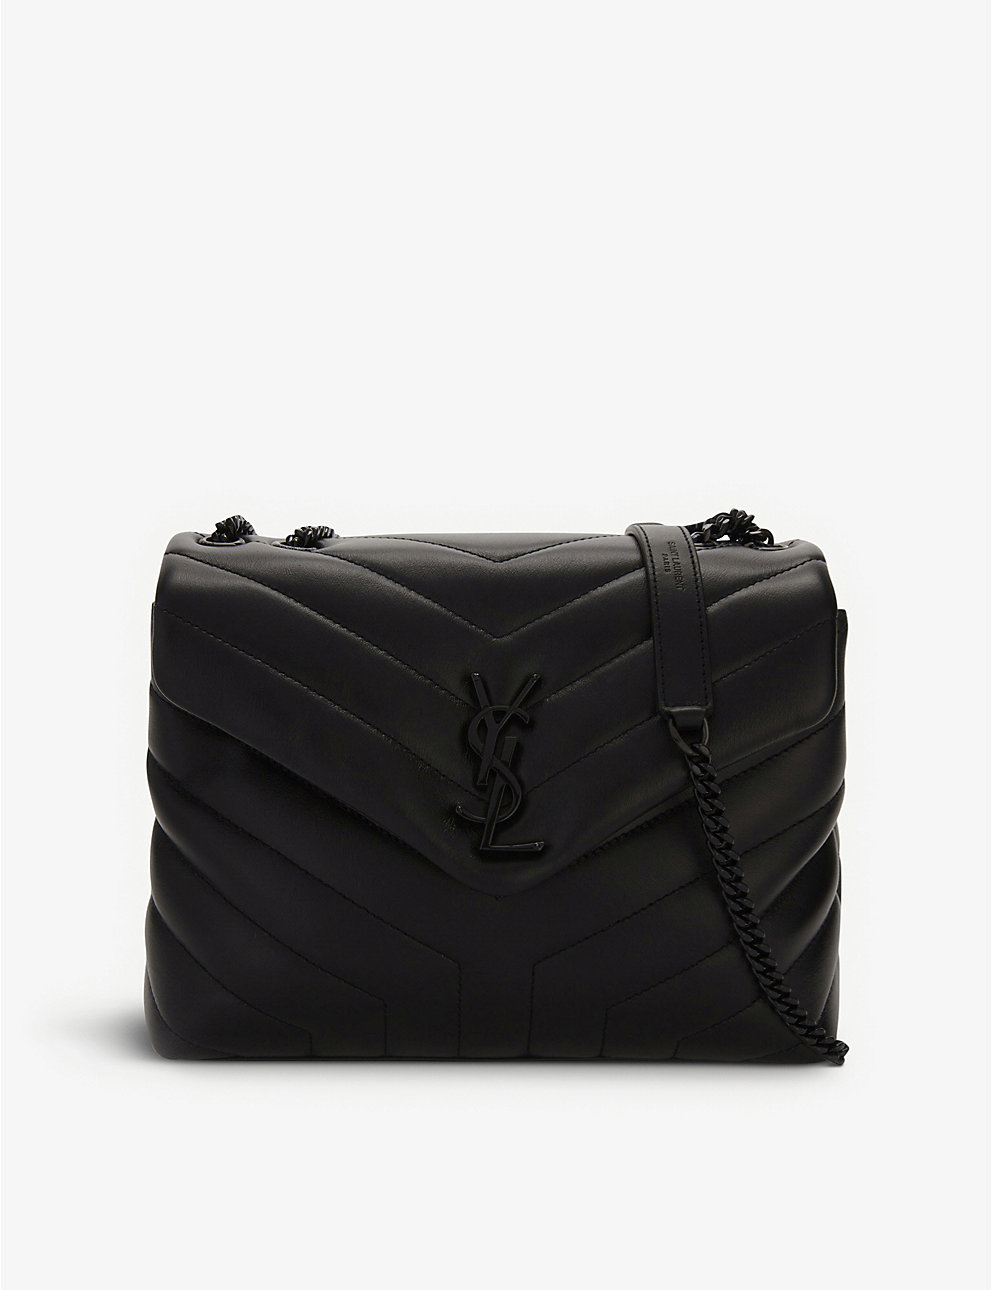 Yves Saint Laurent Loulou Large Black Leather - Tabita Bags